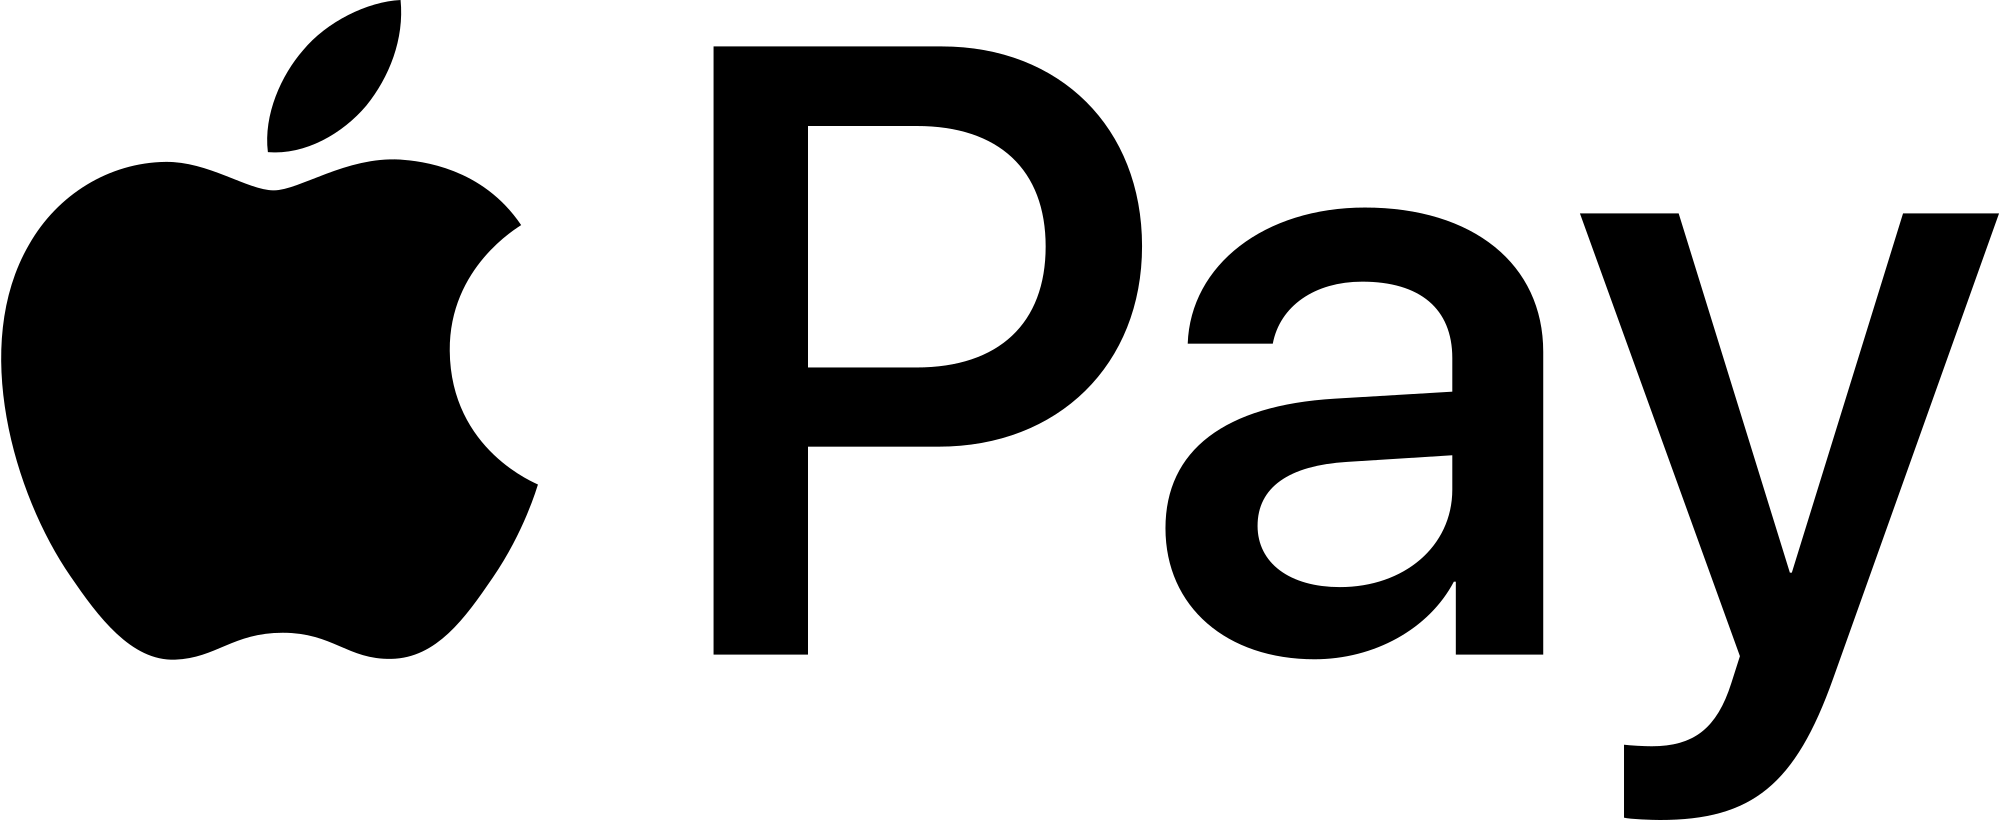 Apple Pay Logo - File:Apple Pay logo.svg - Wikimedia Commons